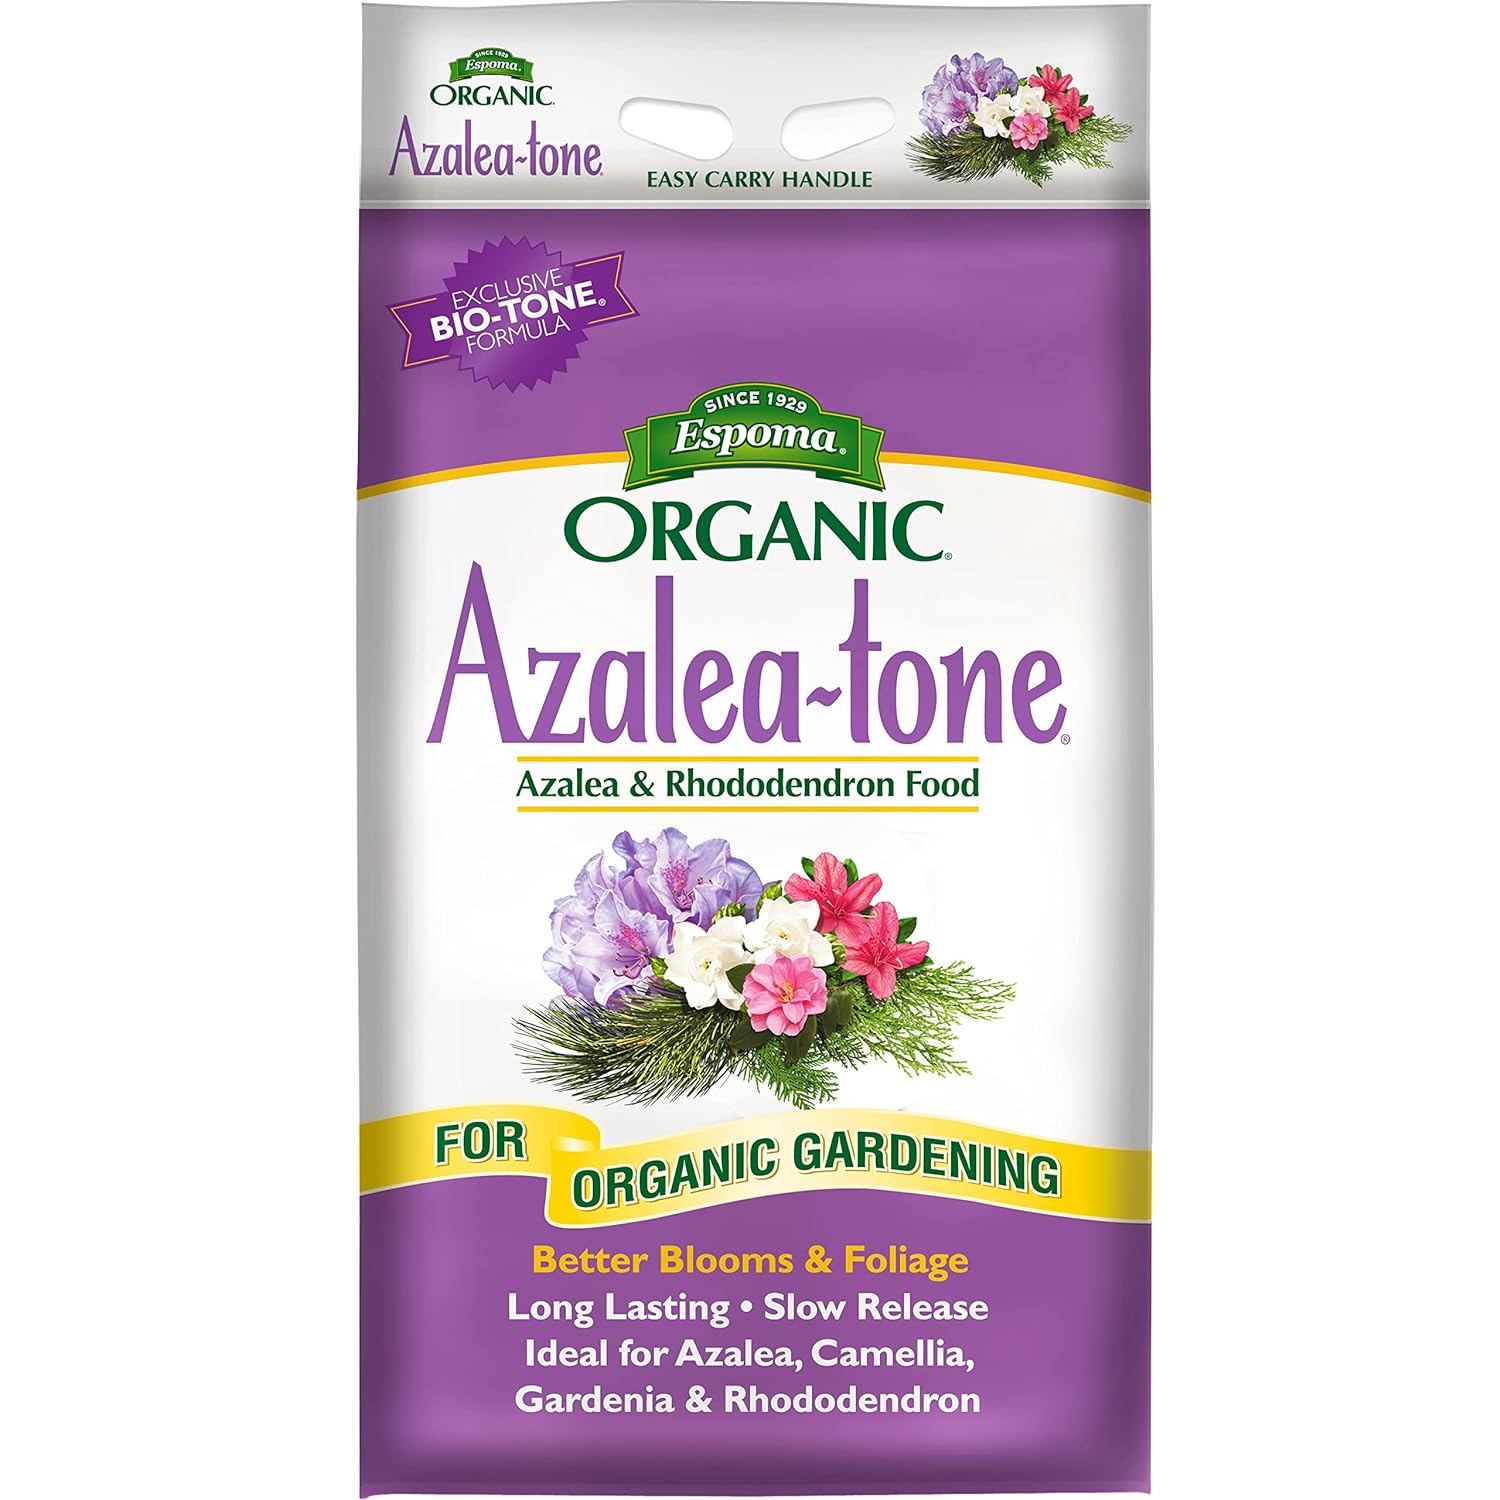 Espoma Organic Azalea-tone 4-3-4 Azalea & Rhododendron Food for Organic Gardening, Better Blooms & Foliage